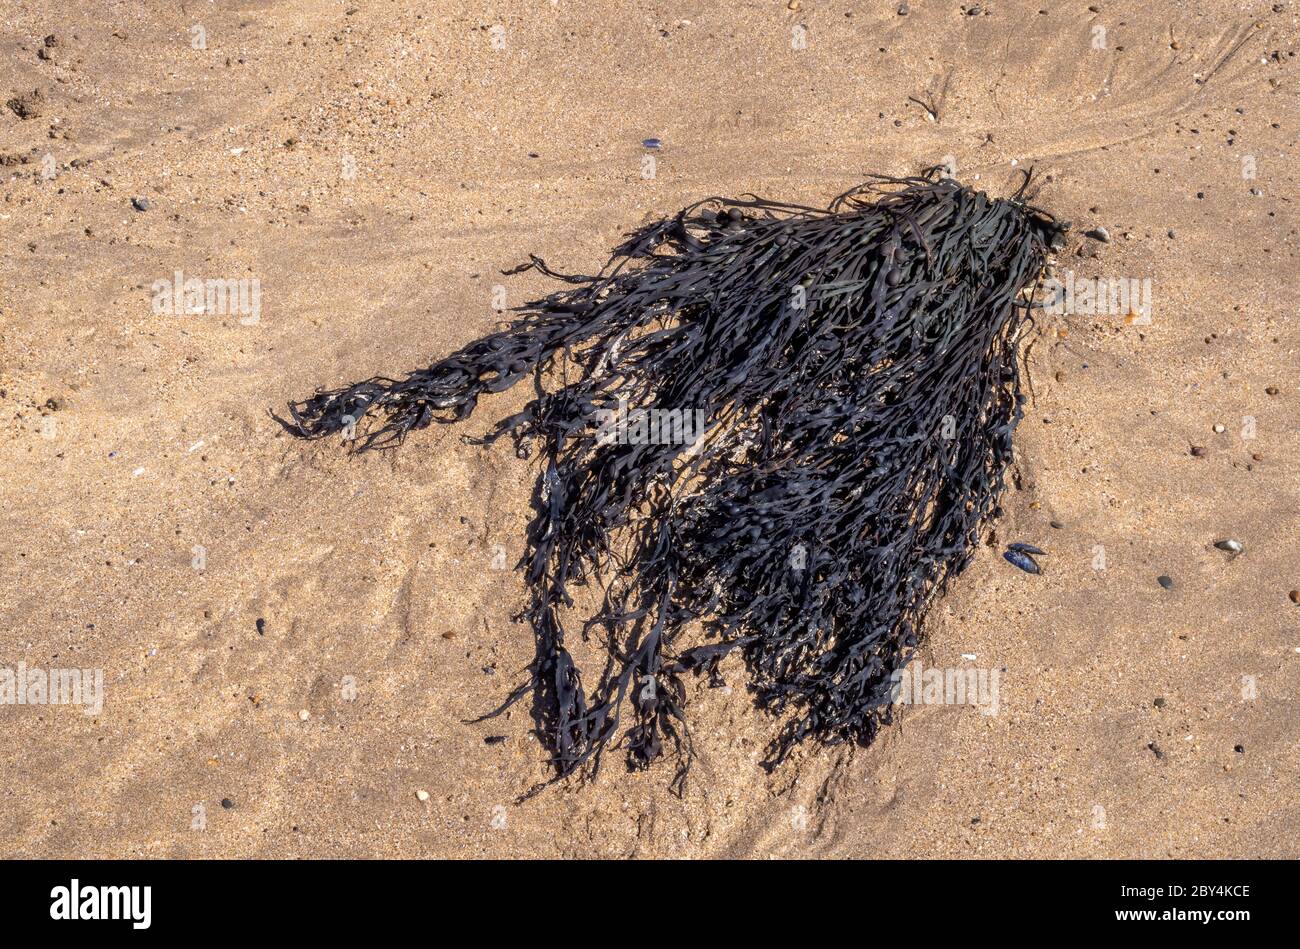 Seaweed, bladderwrack, dried on sandy beach, UK. Medicinal. Fucus vesiculosus. Stock Photo